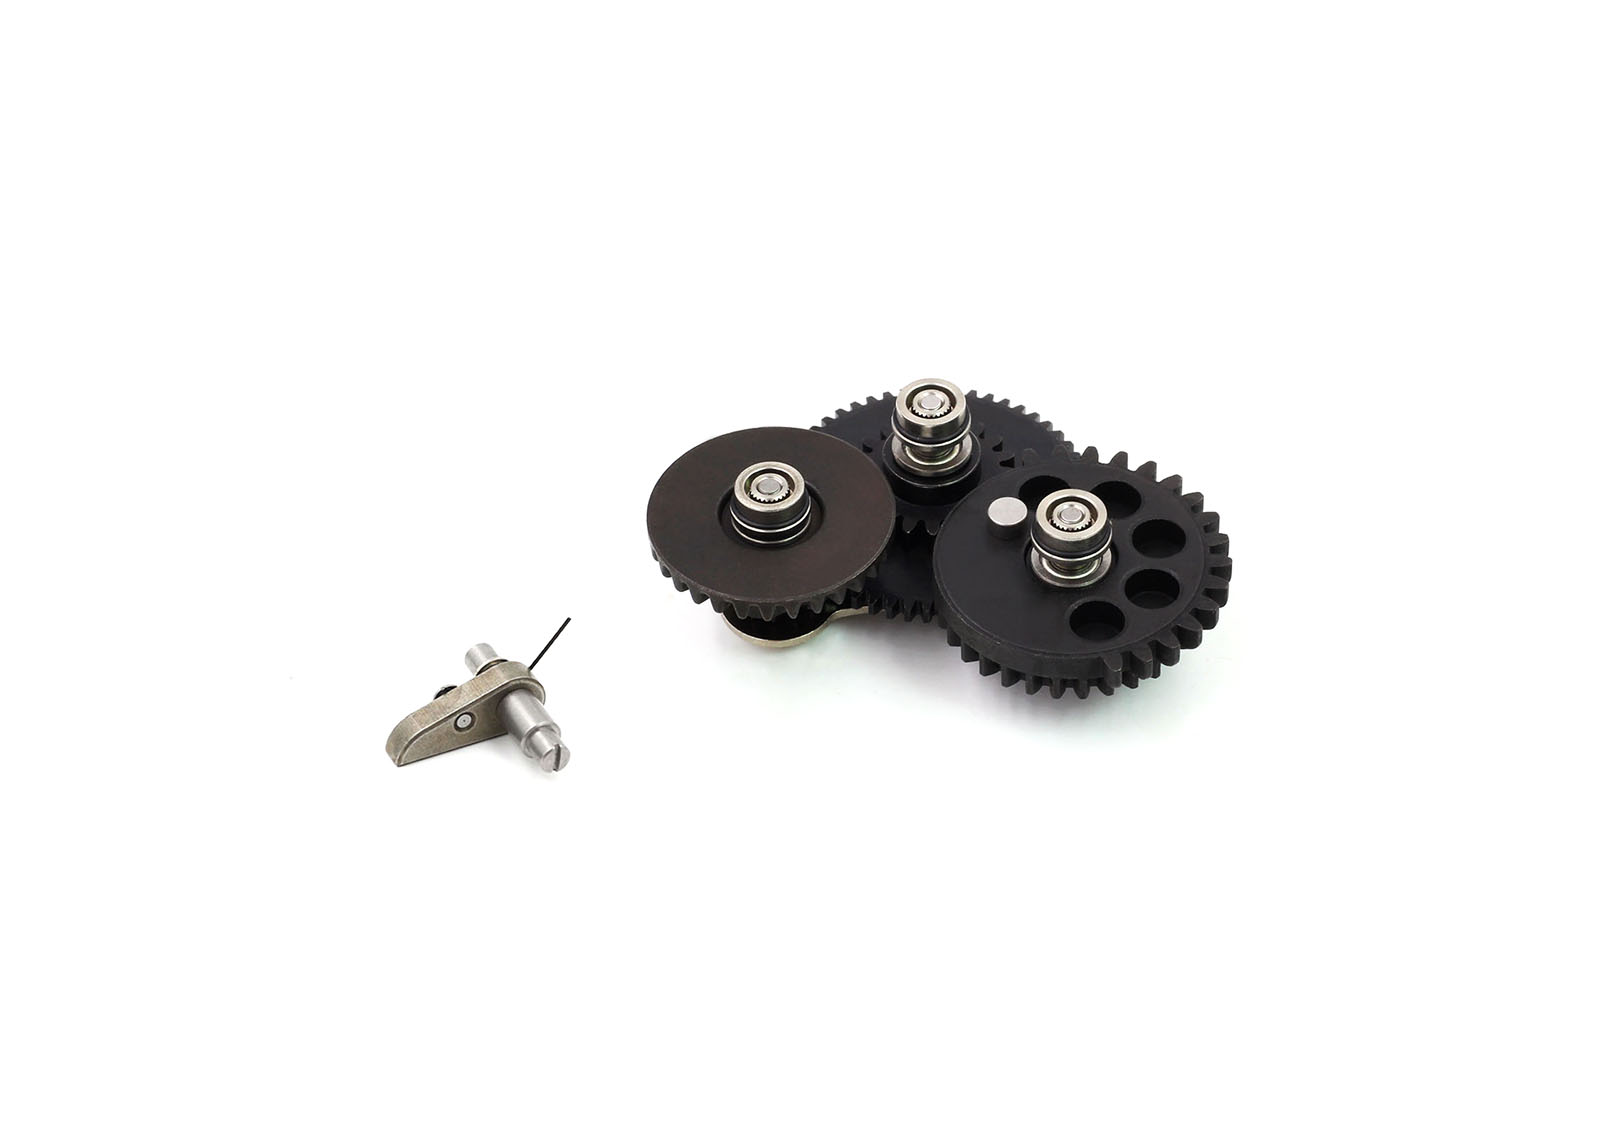 Modular Gear Set - SMOOTH 8mm Ver.2/Ver.3 (Torque 21.6:1) - Modify Airsoft parts